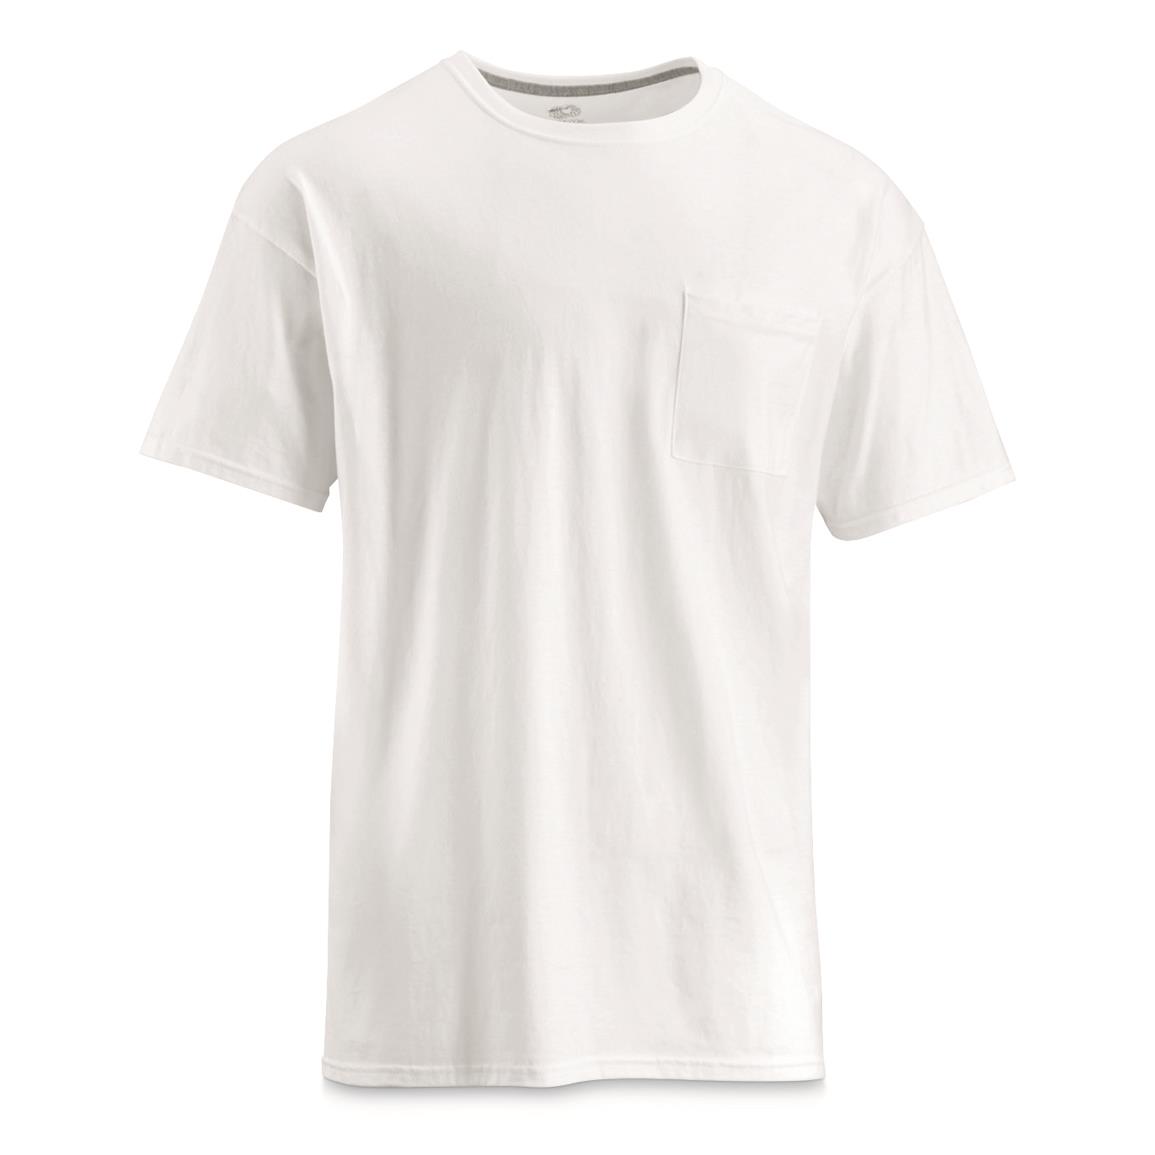 U.S. Military Surplus Pocket T-Shirts, 6 Pack, New, White